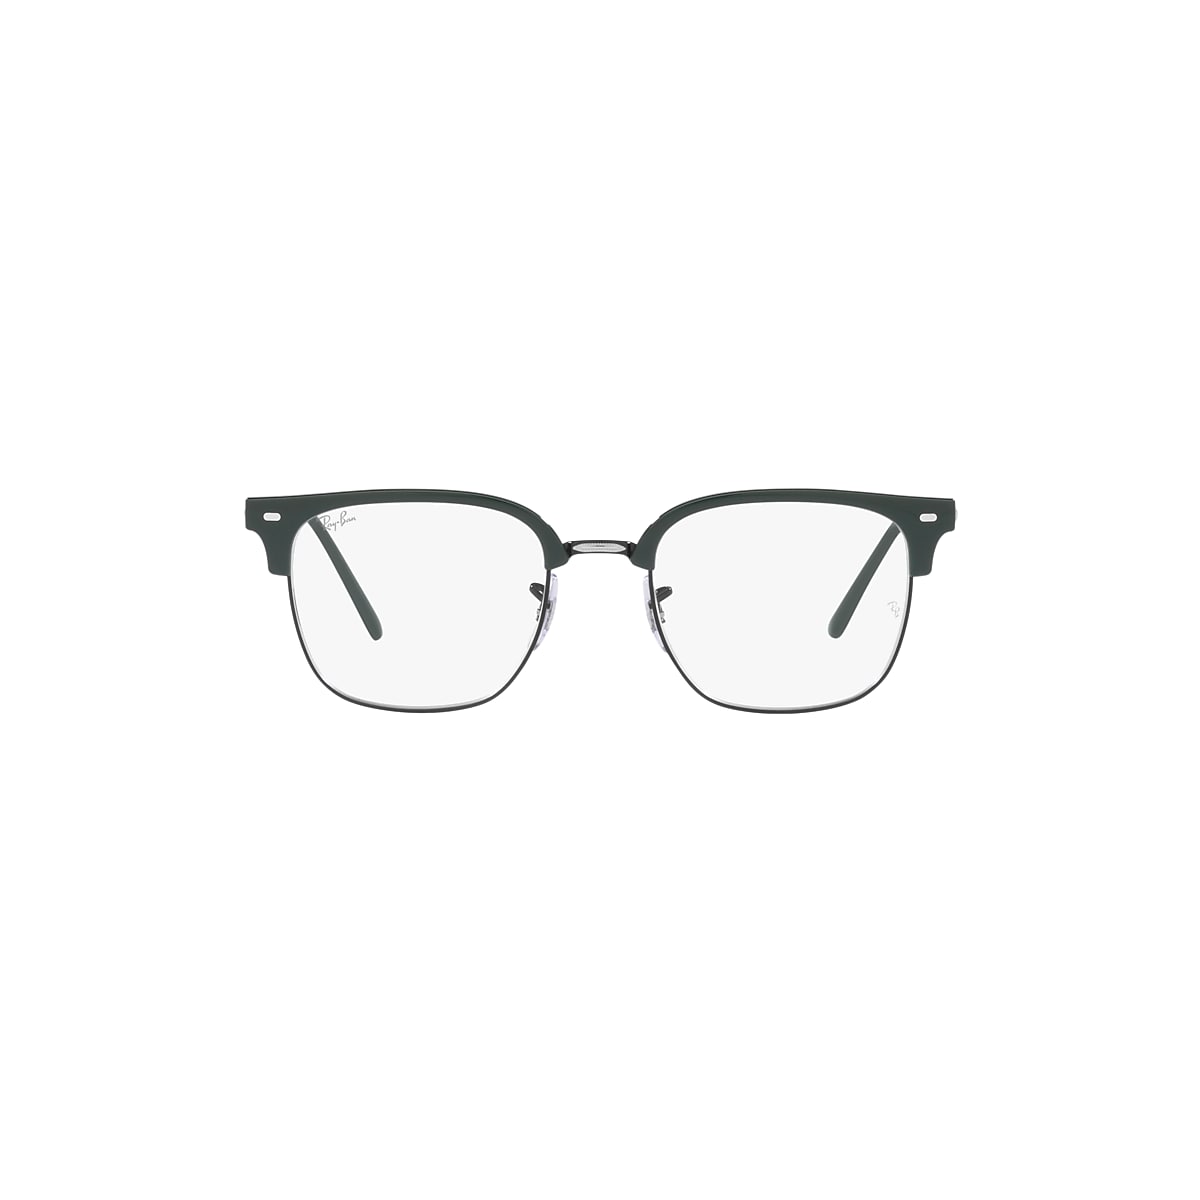 NEW CLUBMASTER OPTICS Eyeglasses with Green On Black Frame